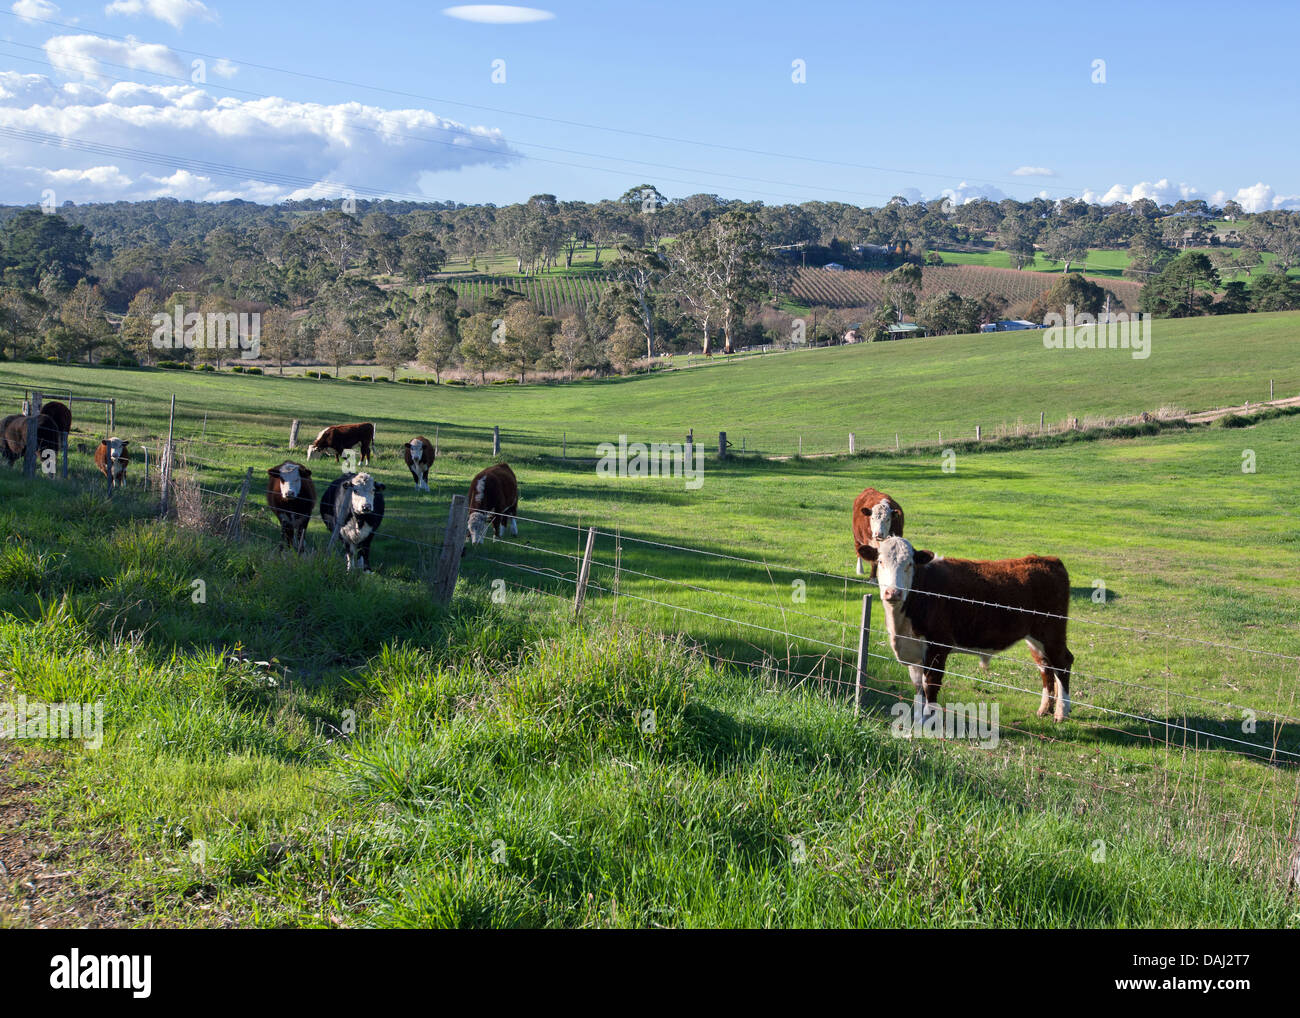 Bäume ländlich geprägtes Land Kühe Herde Bauernhof Landwirtschaft Landwirtschaft landwirtschaftliche Fleurieu Peninsula Süd Australien Australien Stockfoto